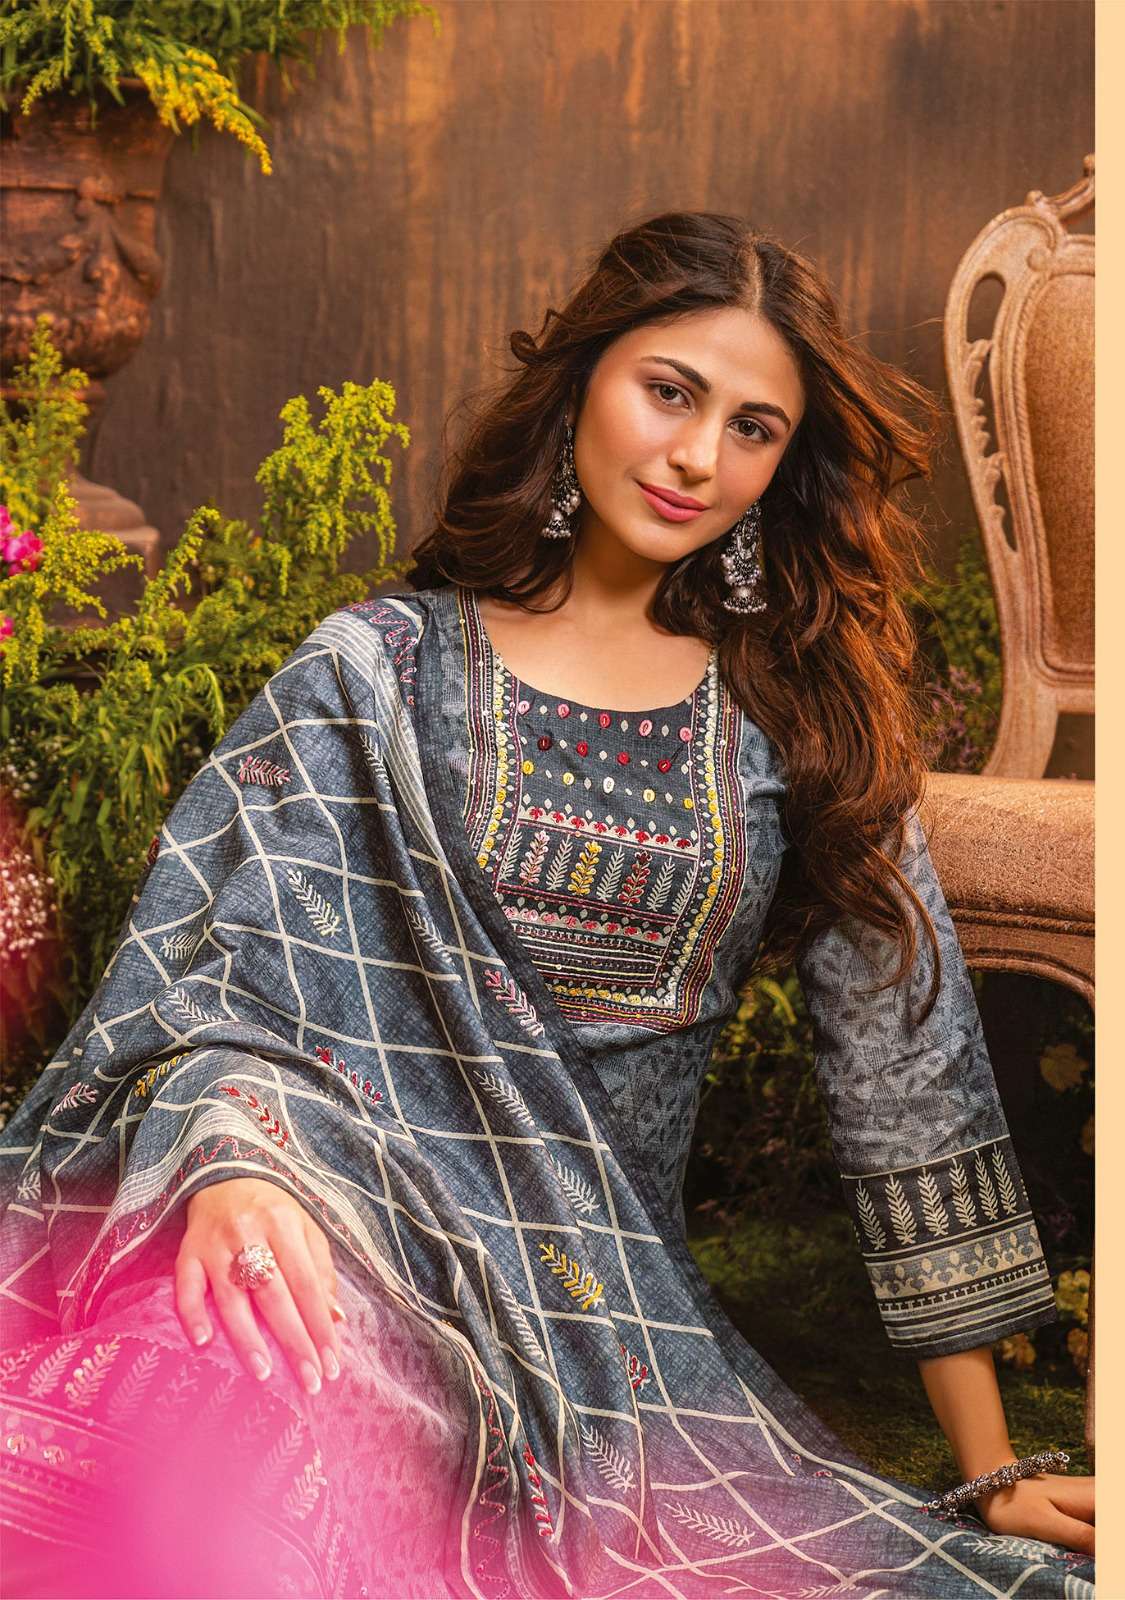 anju fabrics once more vol-2 3061-3066 series designer fancy kurti set wholesaler surat gujarat